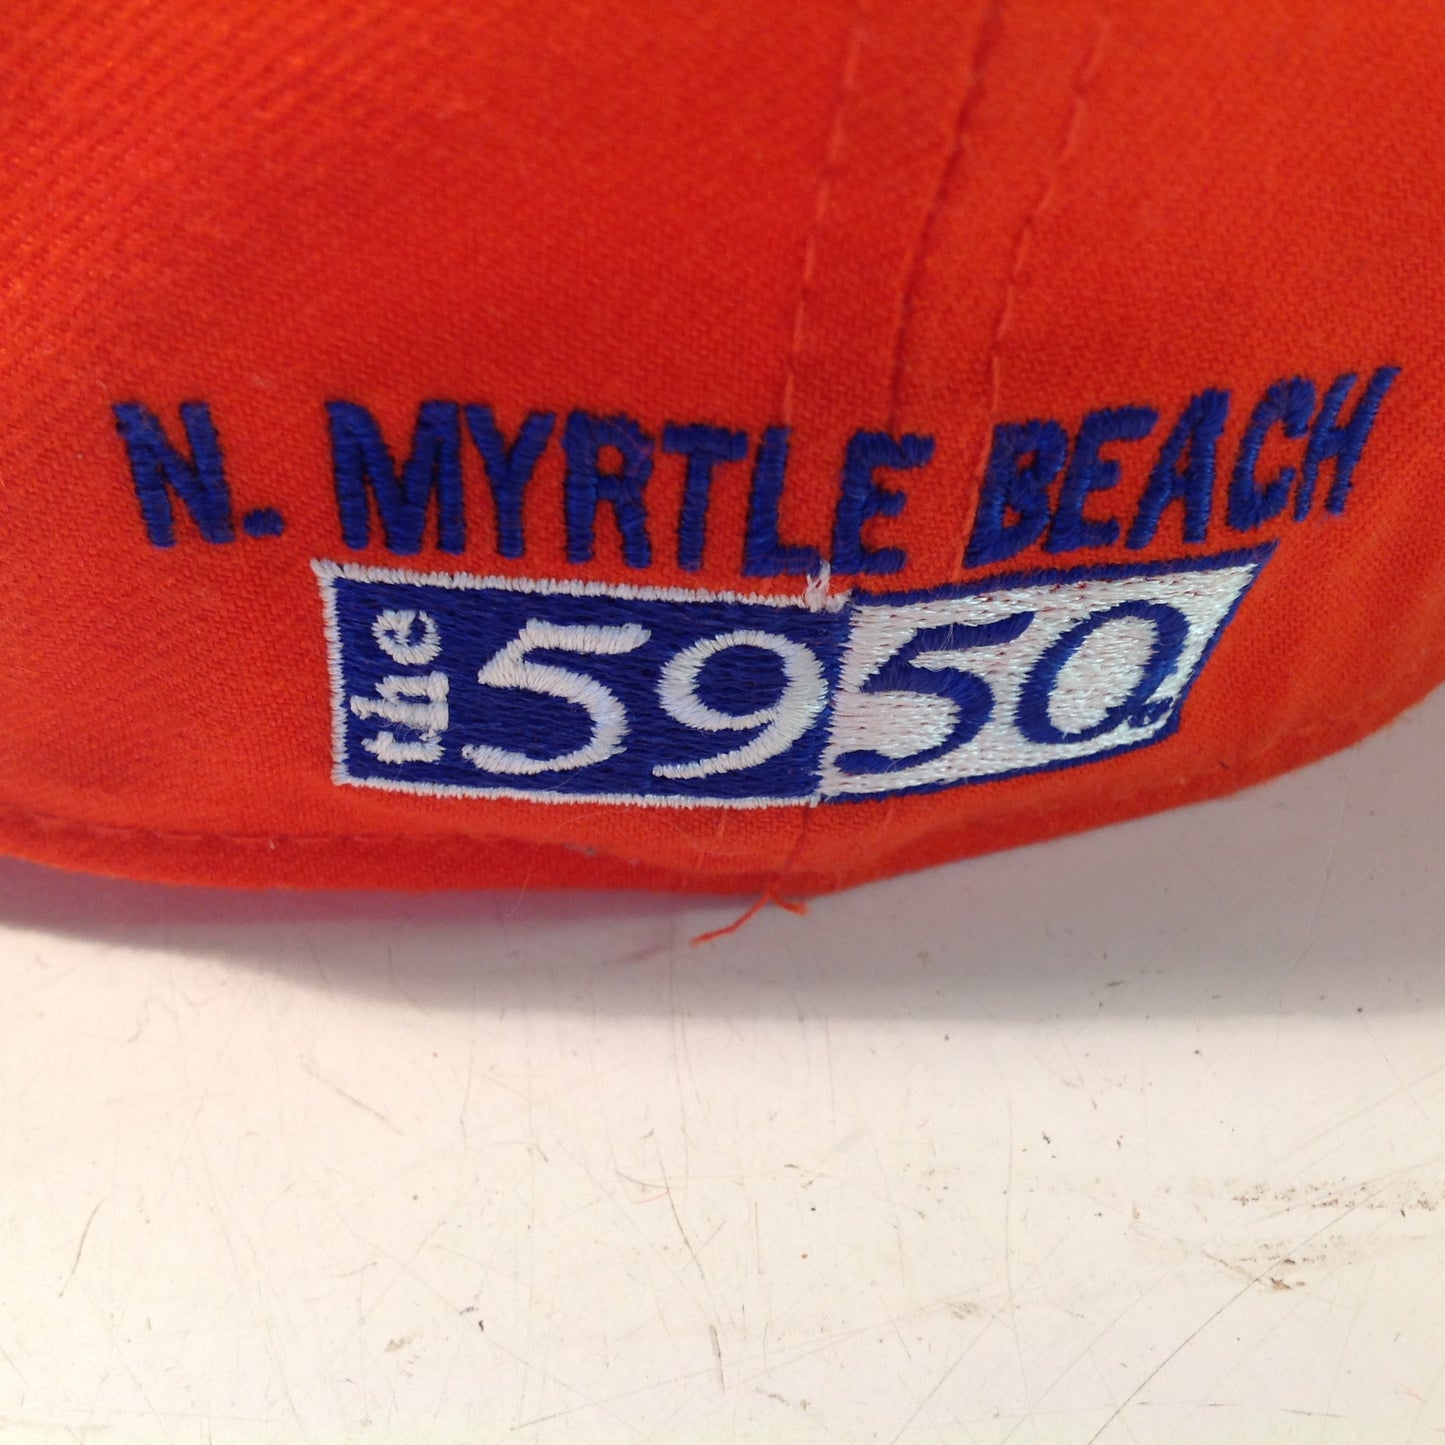 Vintage 1988 New Era 5950 Pro Model Beachwood Golf Club Sun Fun Capital North Myrtle Beach Tournament Souvenir Orange Baseball Cap